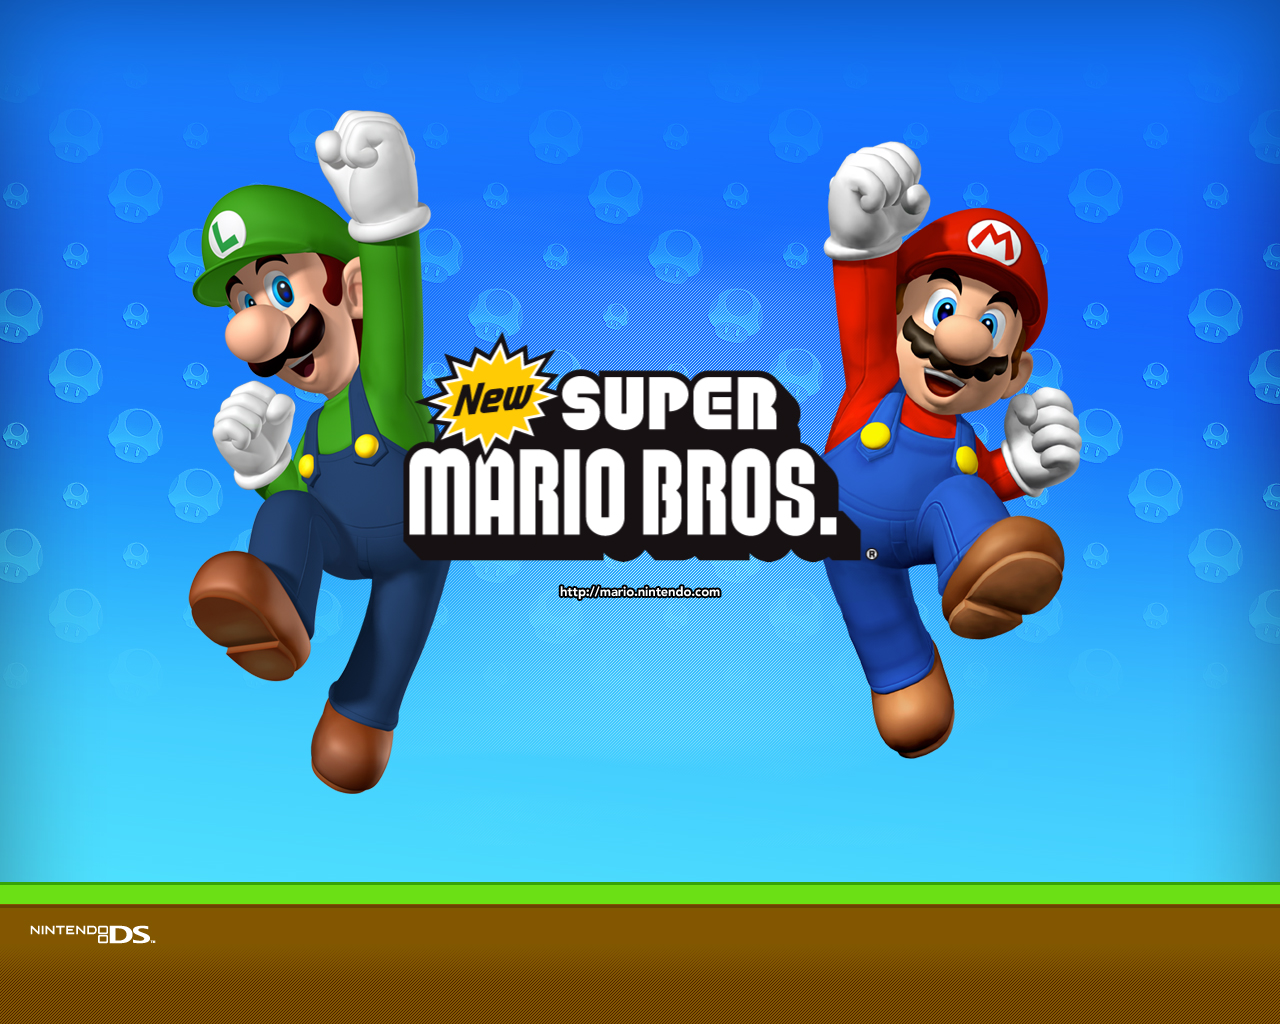 Amazing Super Mario Bros. Pictures & Backgrounds